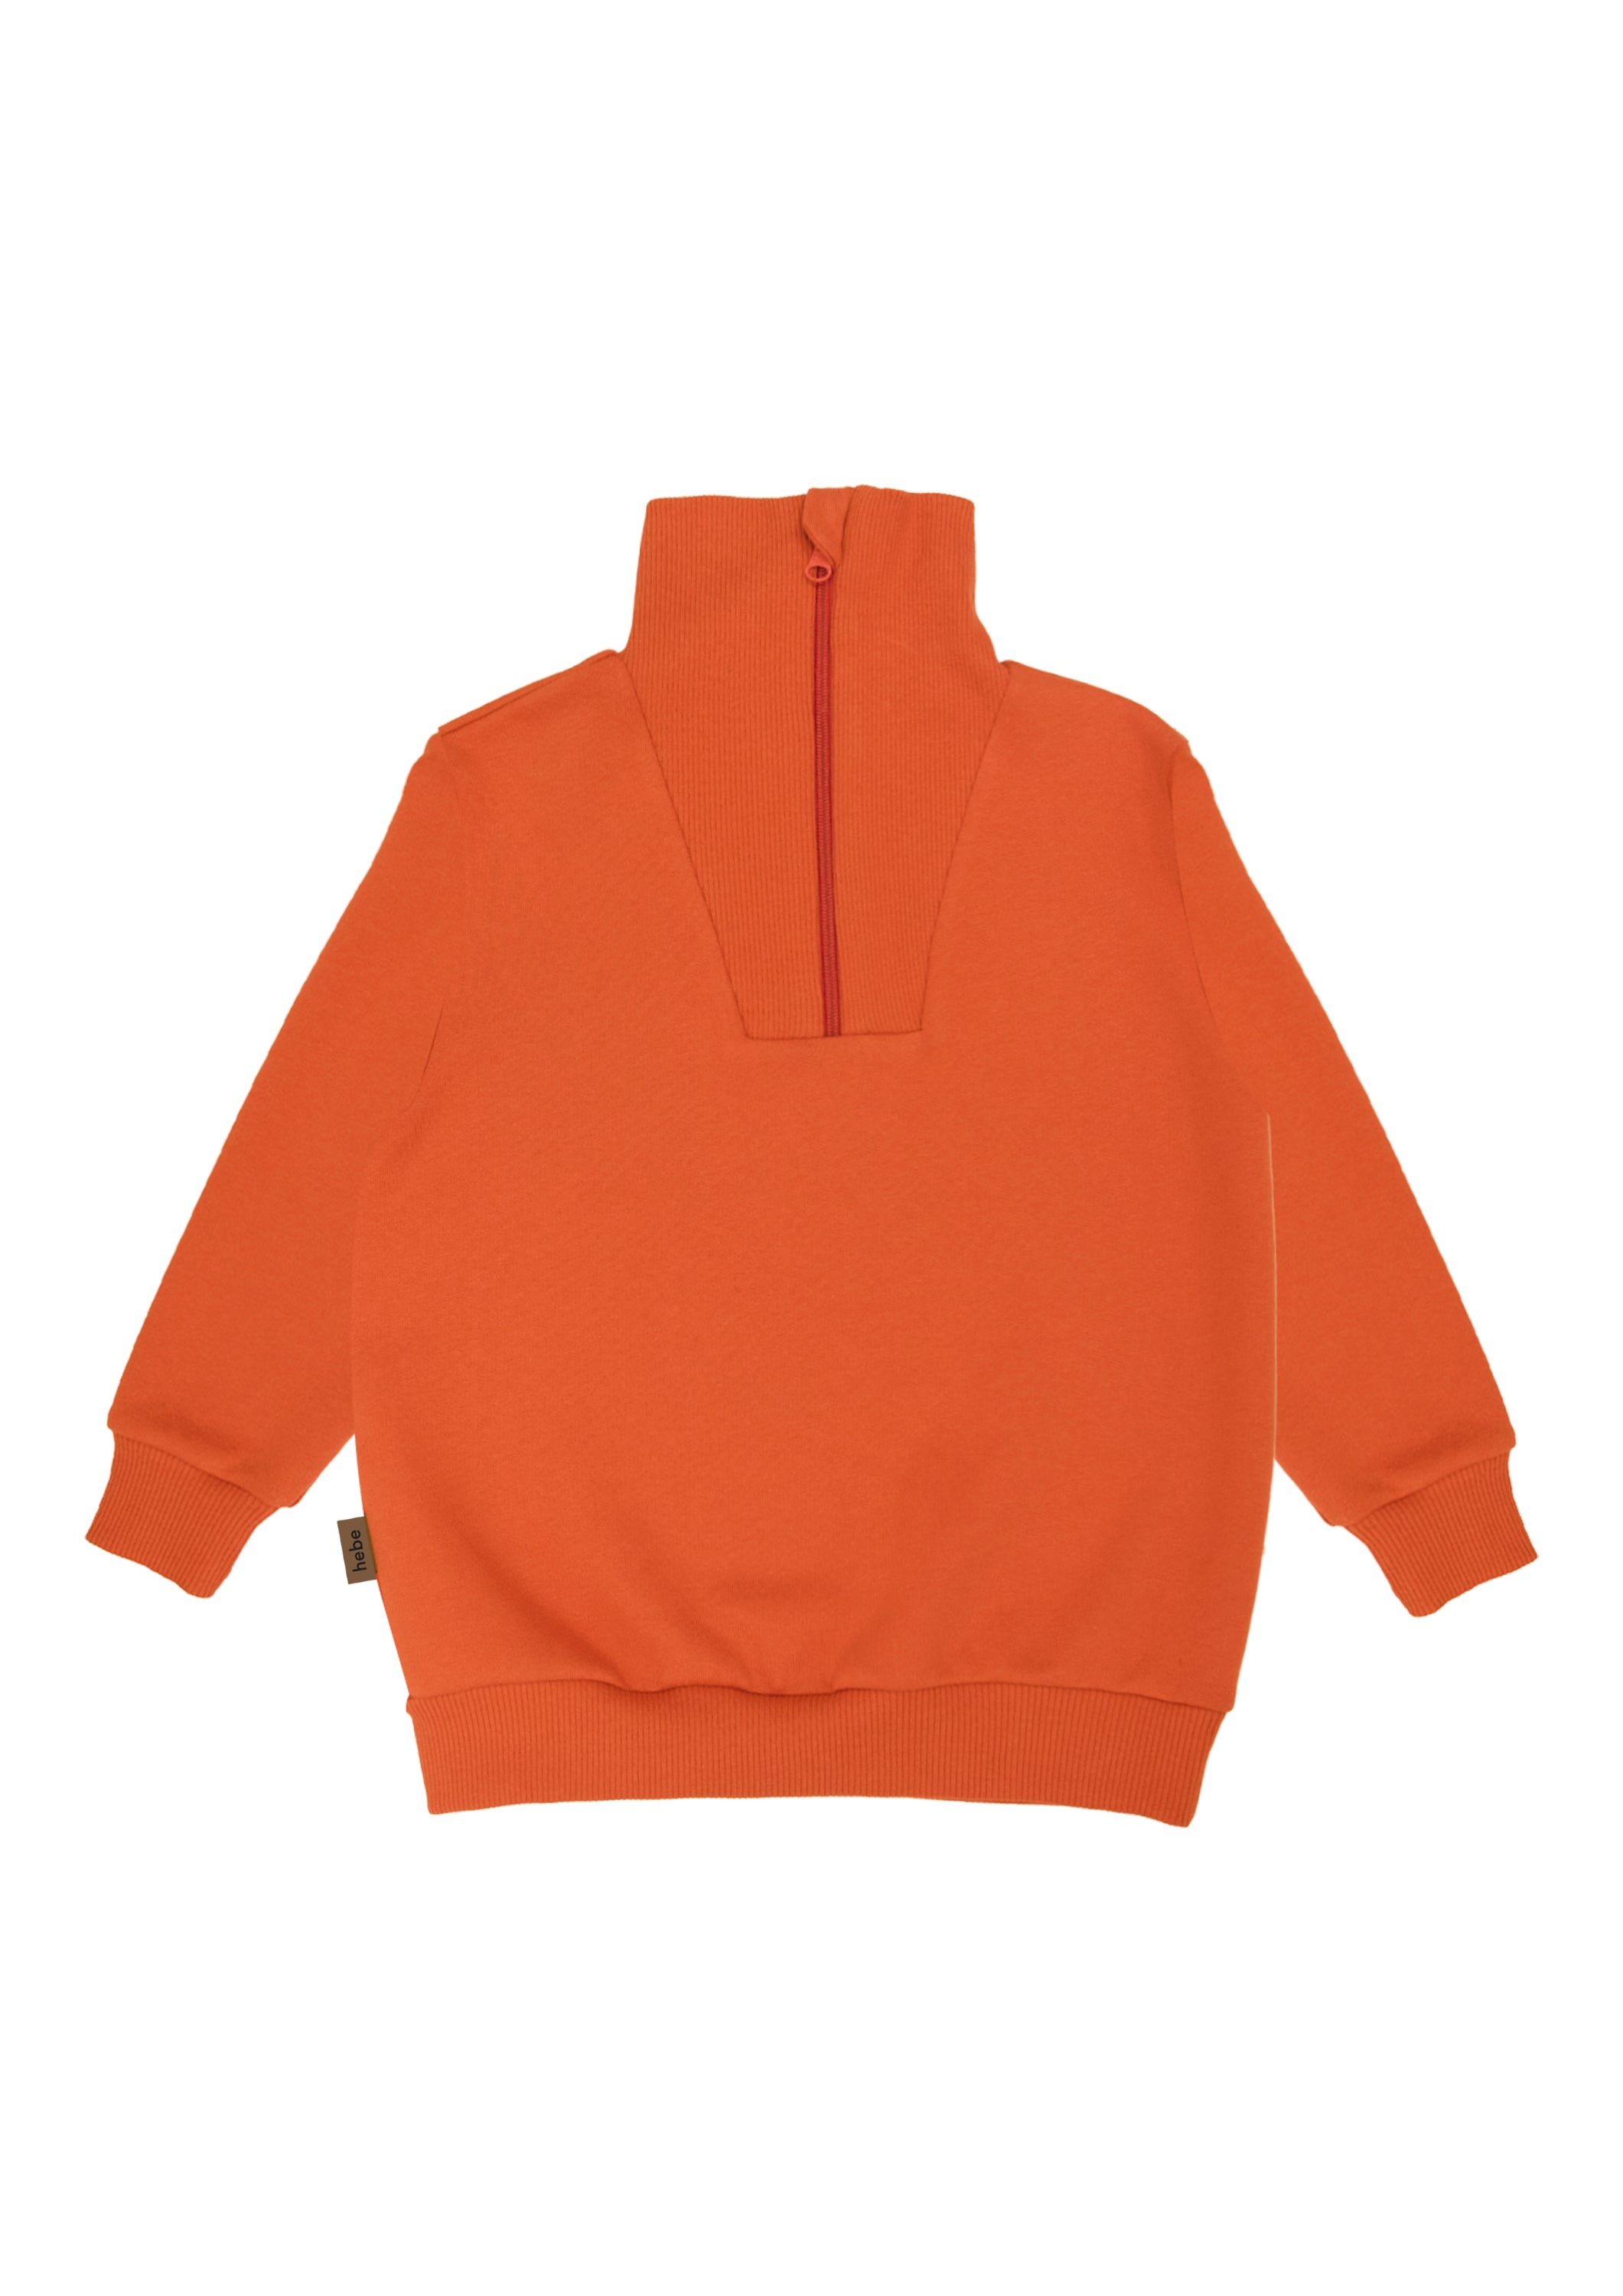 Sweatshirt with Zipper - Bright Orange